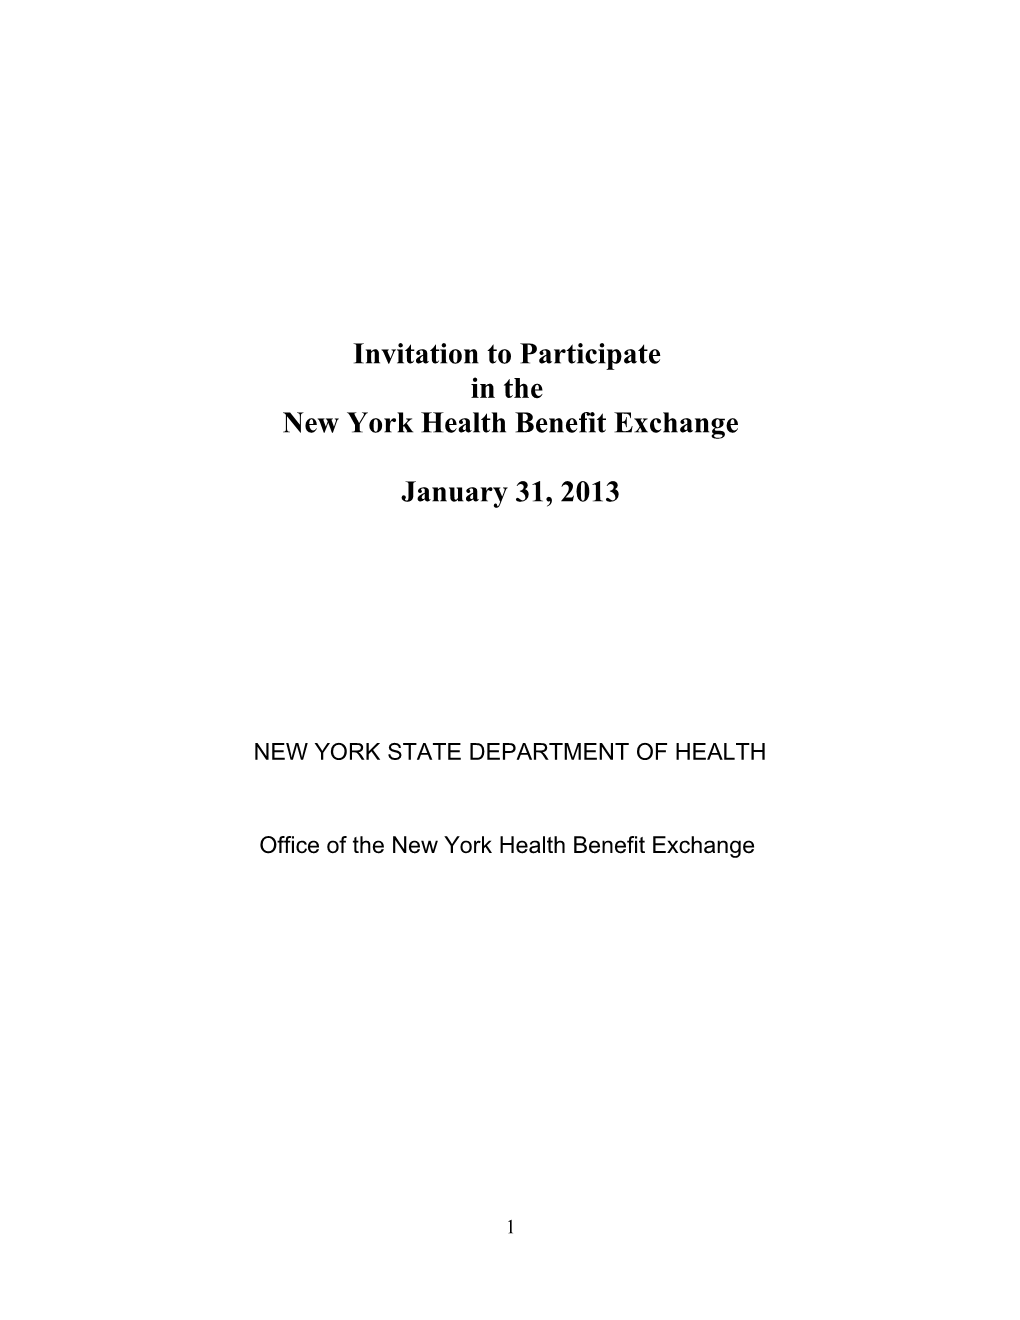 New York Health Benefit Exchange